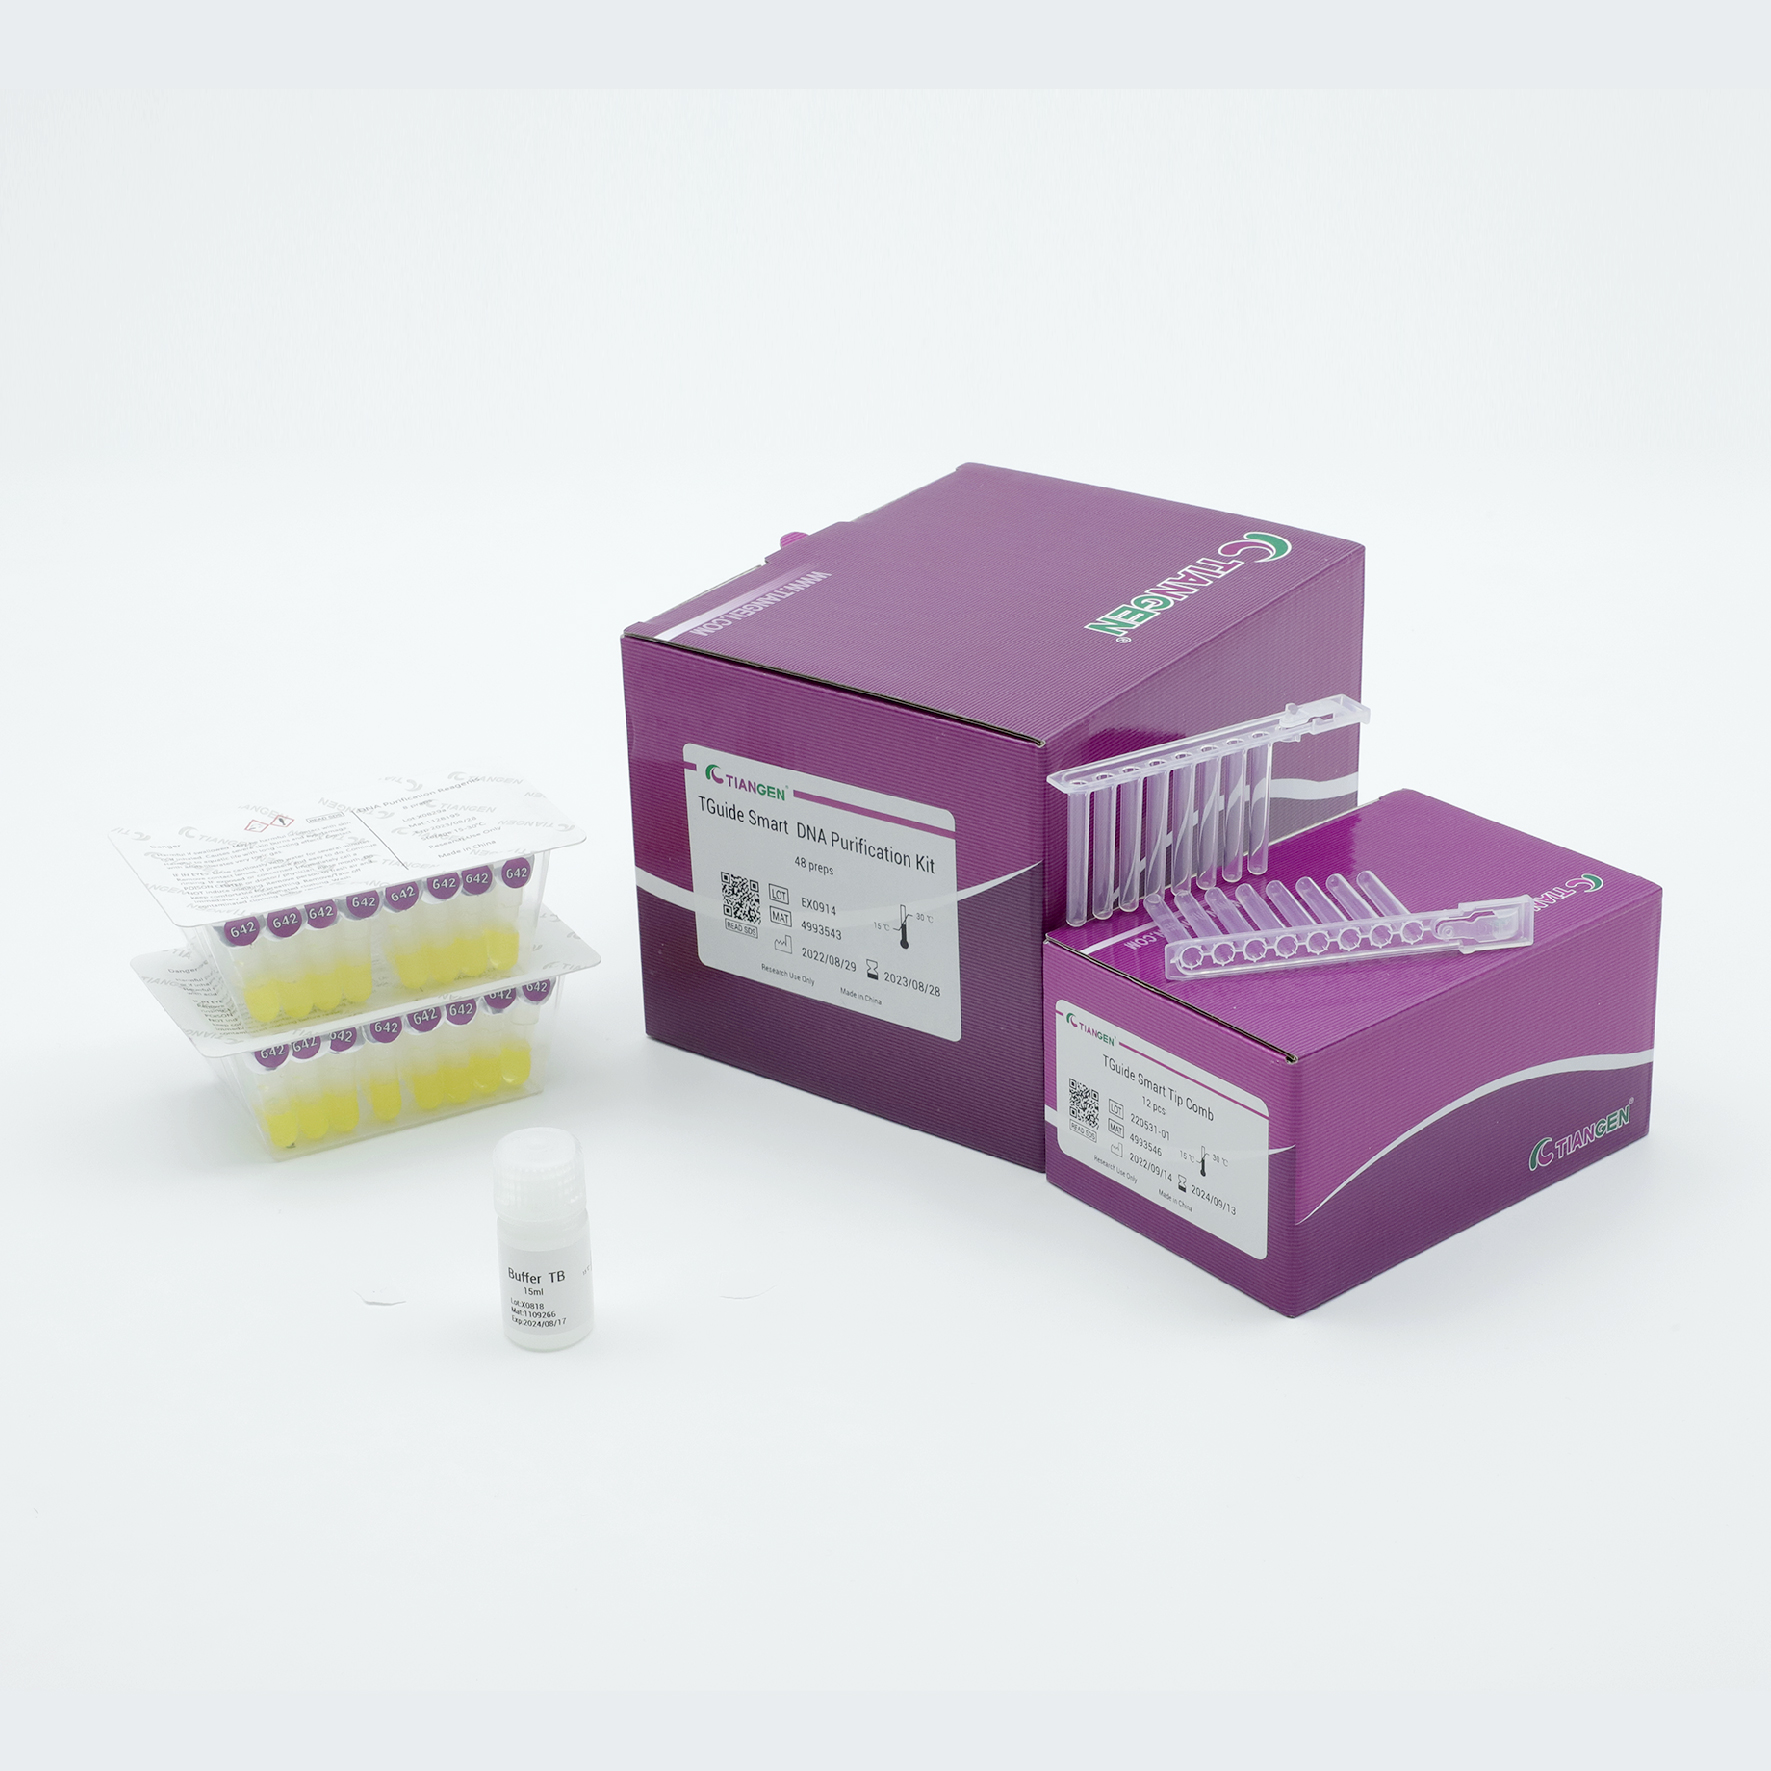 TGuide Smart DNA Purification Kit